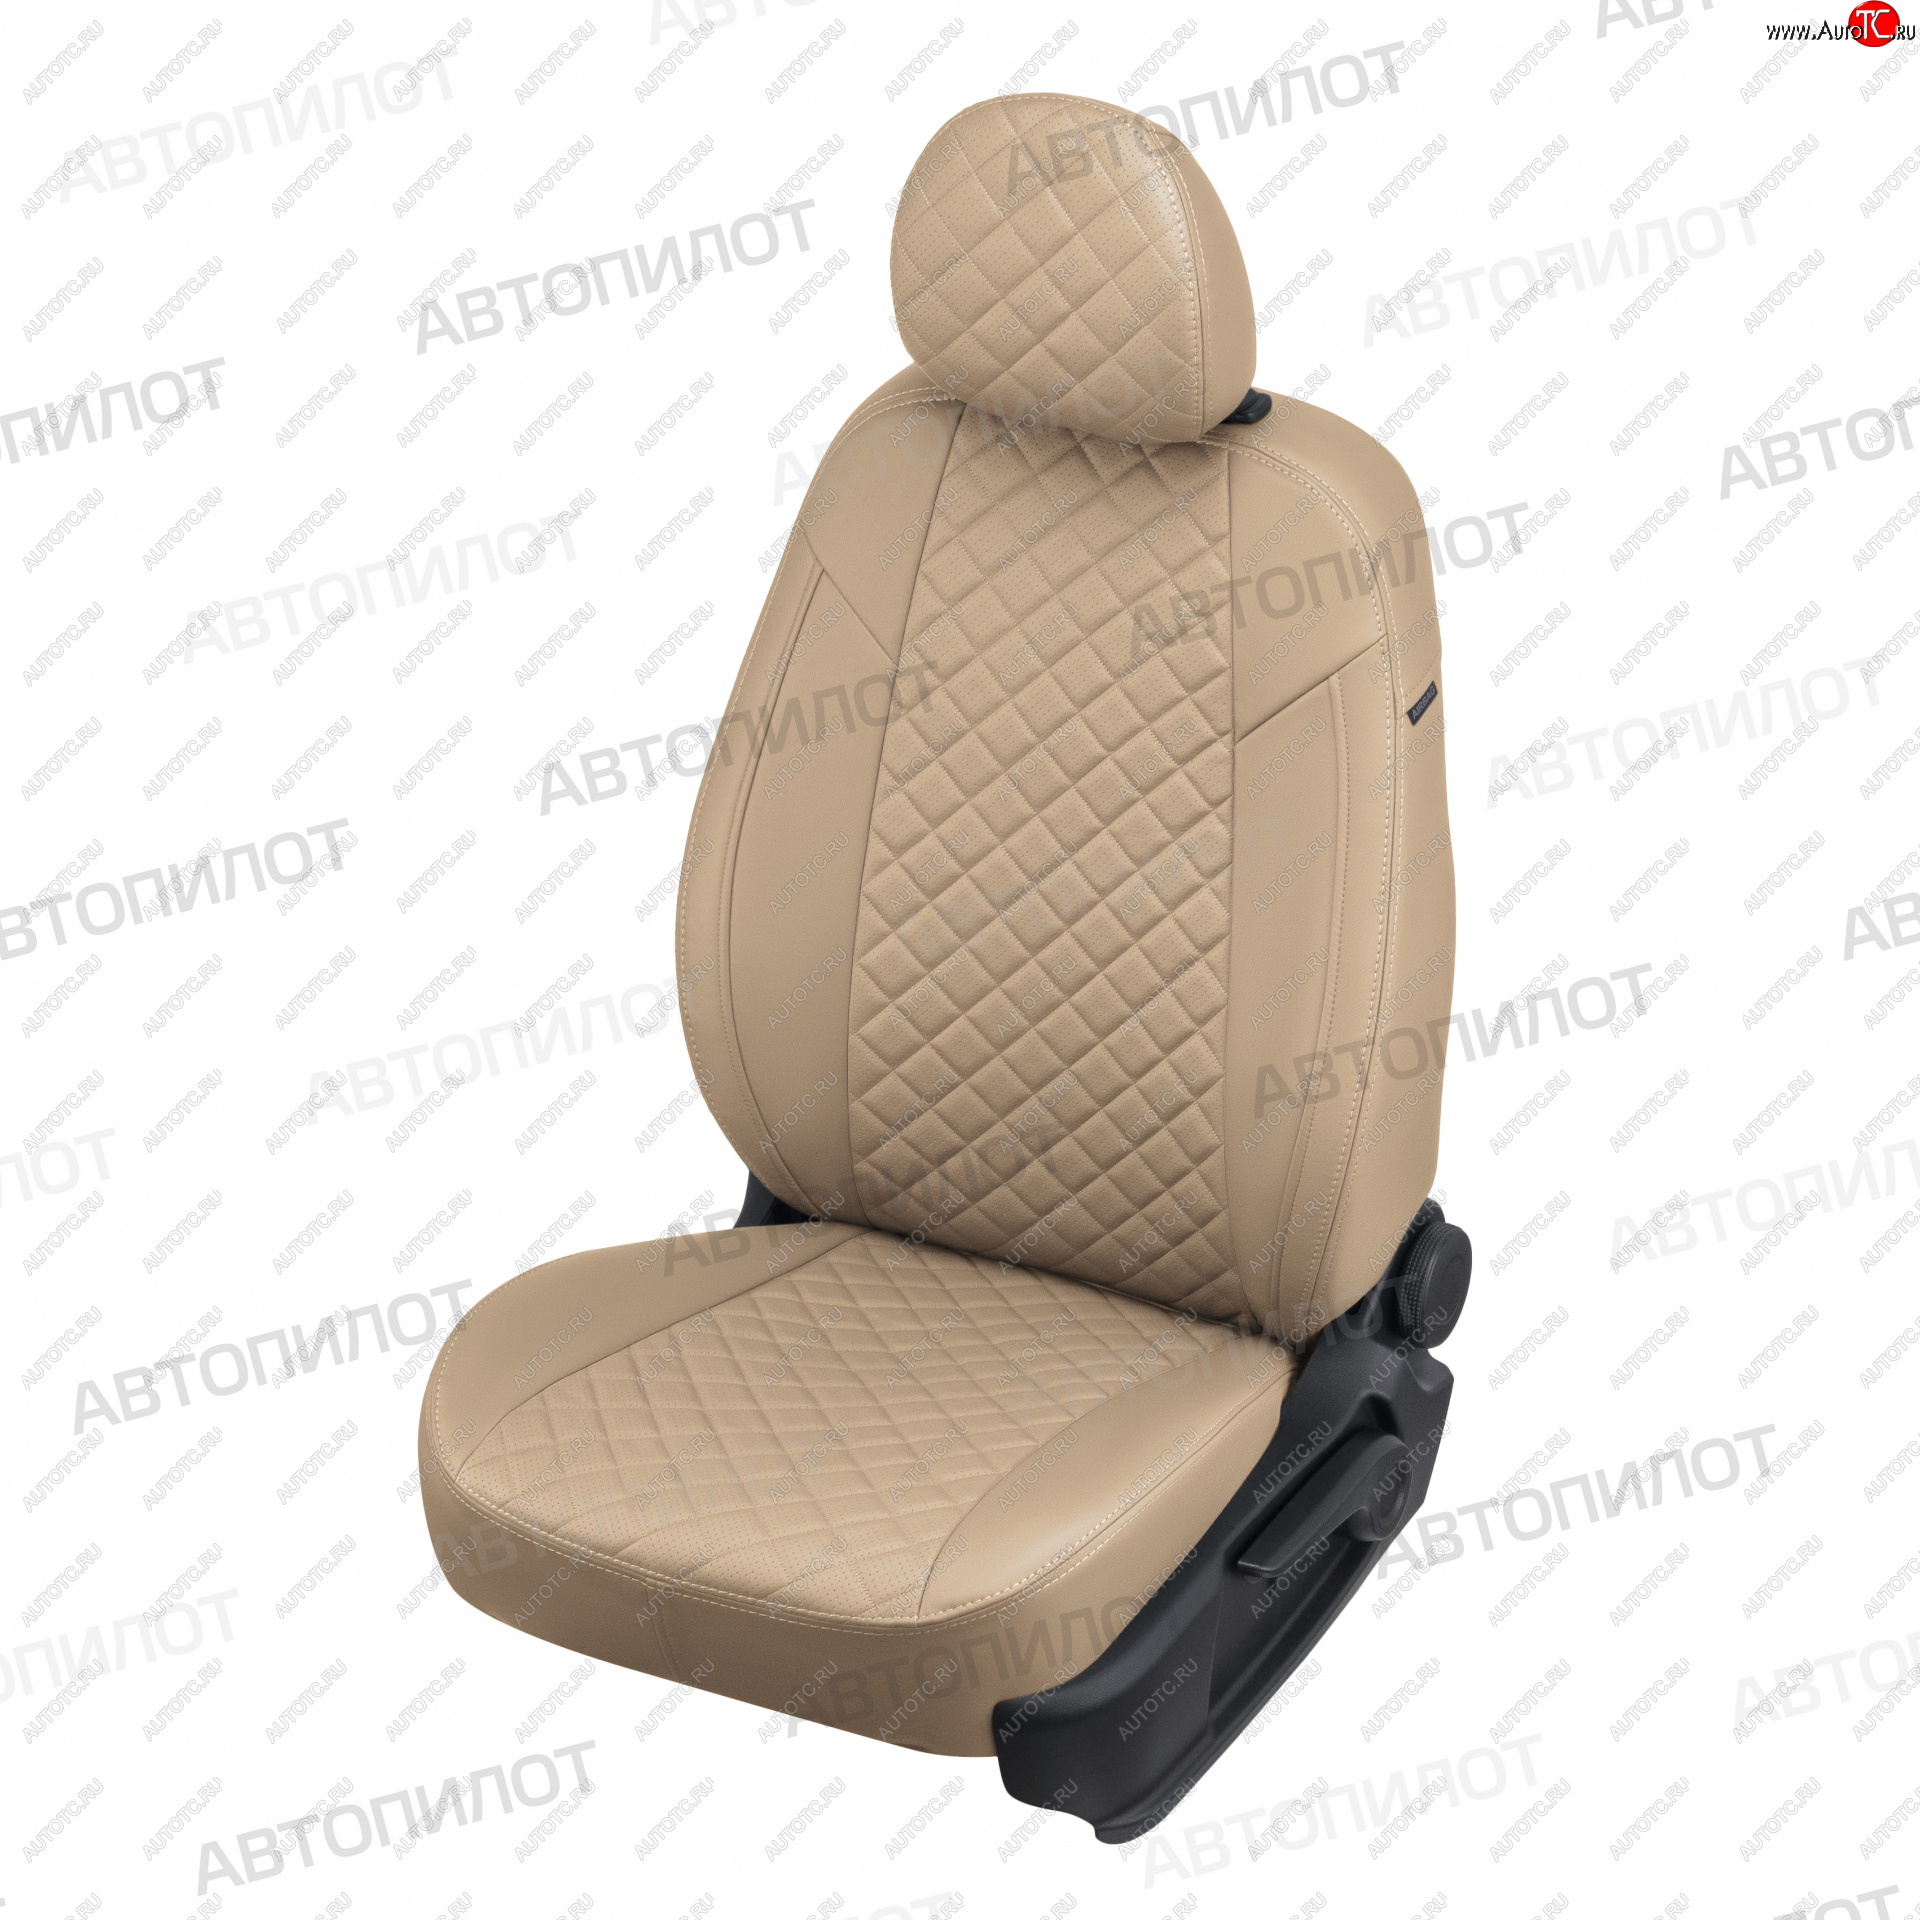 14 499 р. Чехлы сидений (Titanium, экокожа) Автопилот Ромб  Ford Kuga  1 (2008-2013) (темно-бежевый)